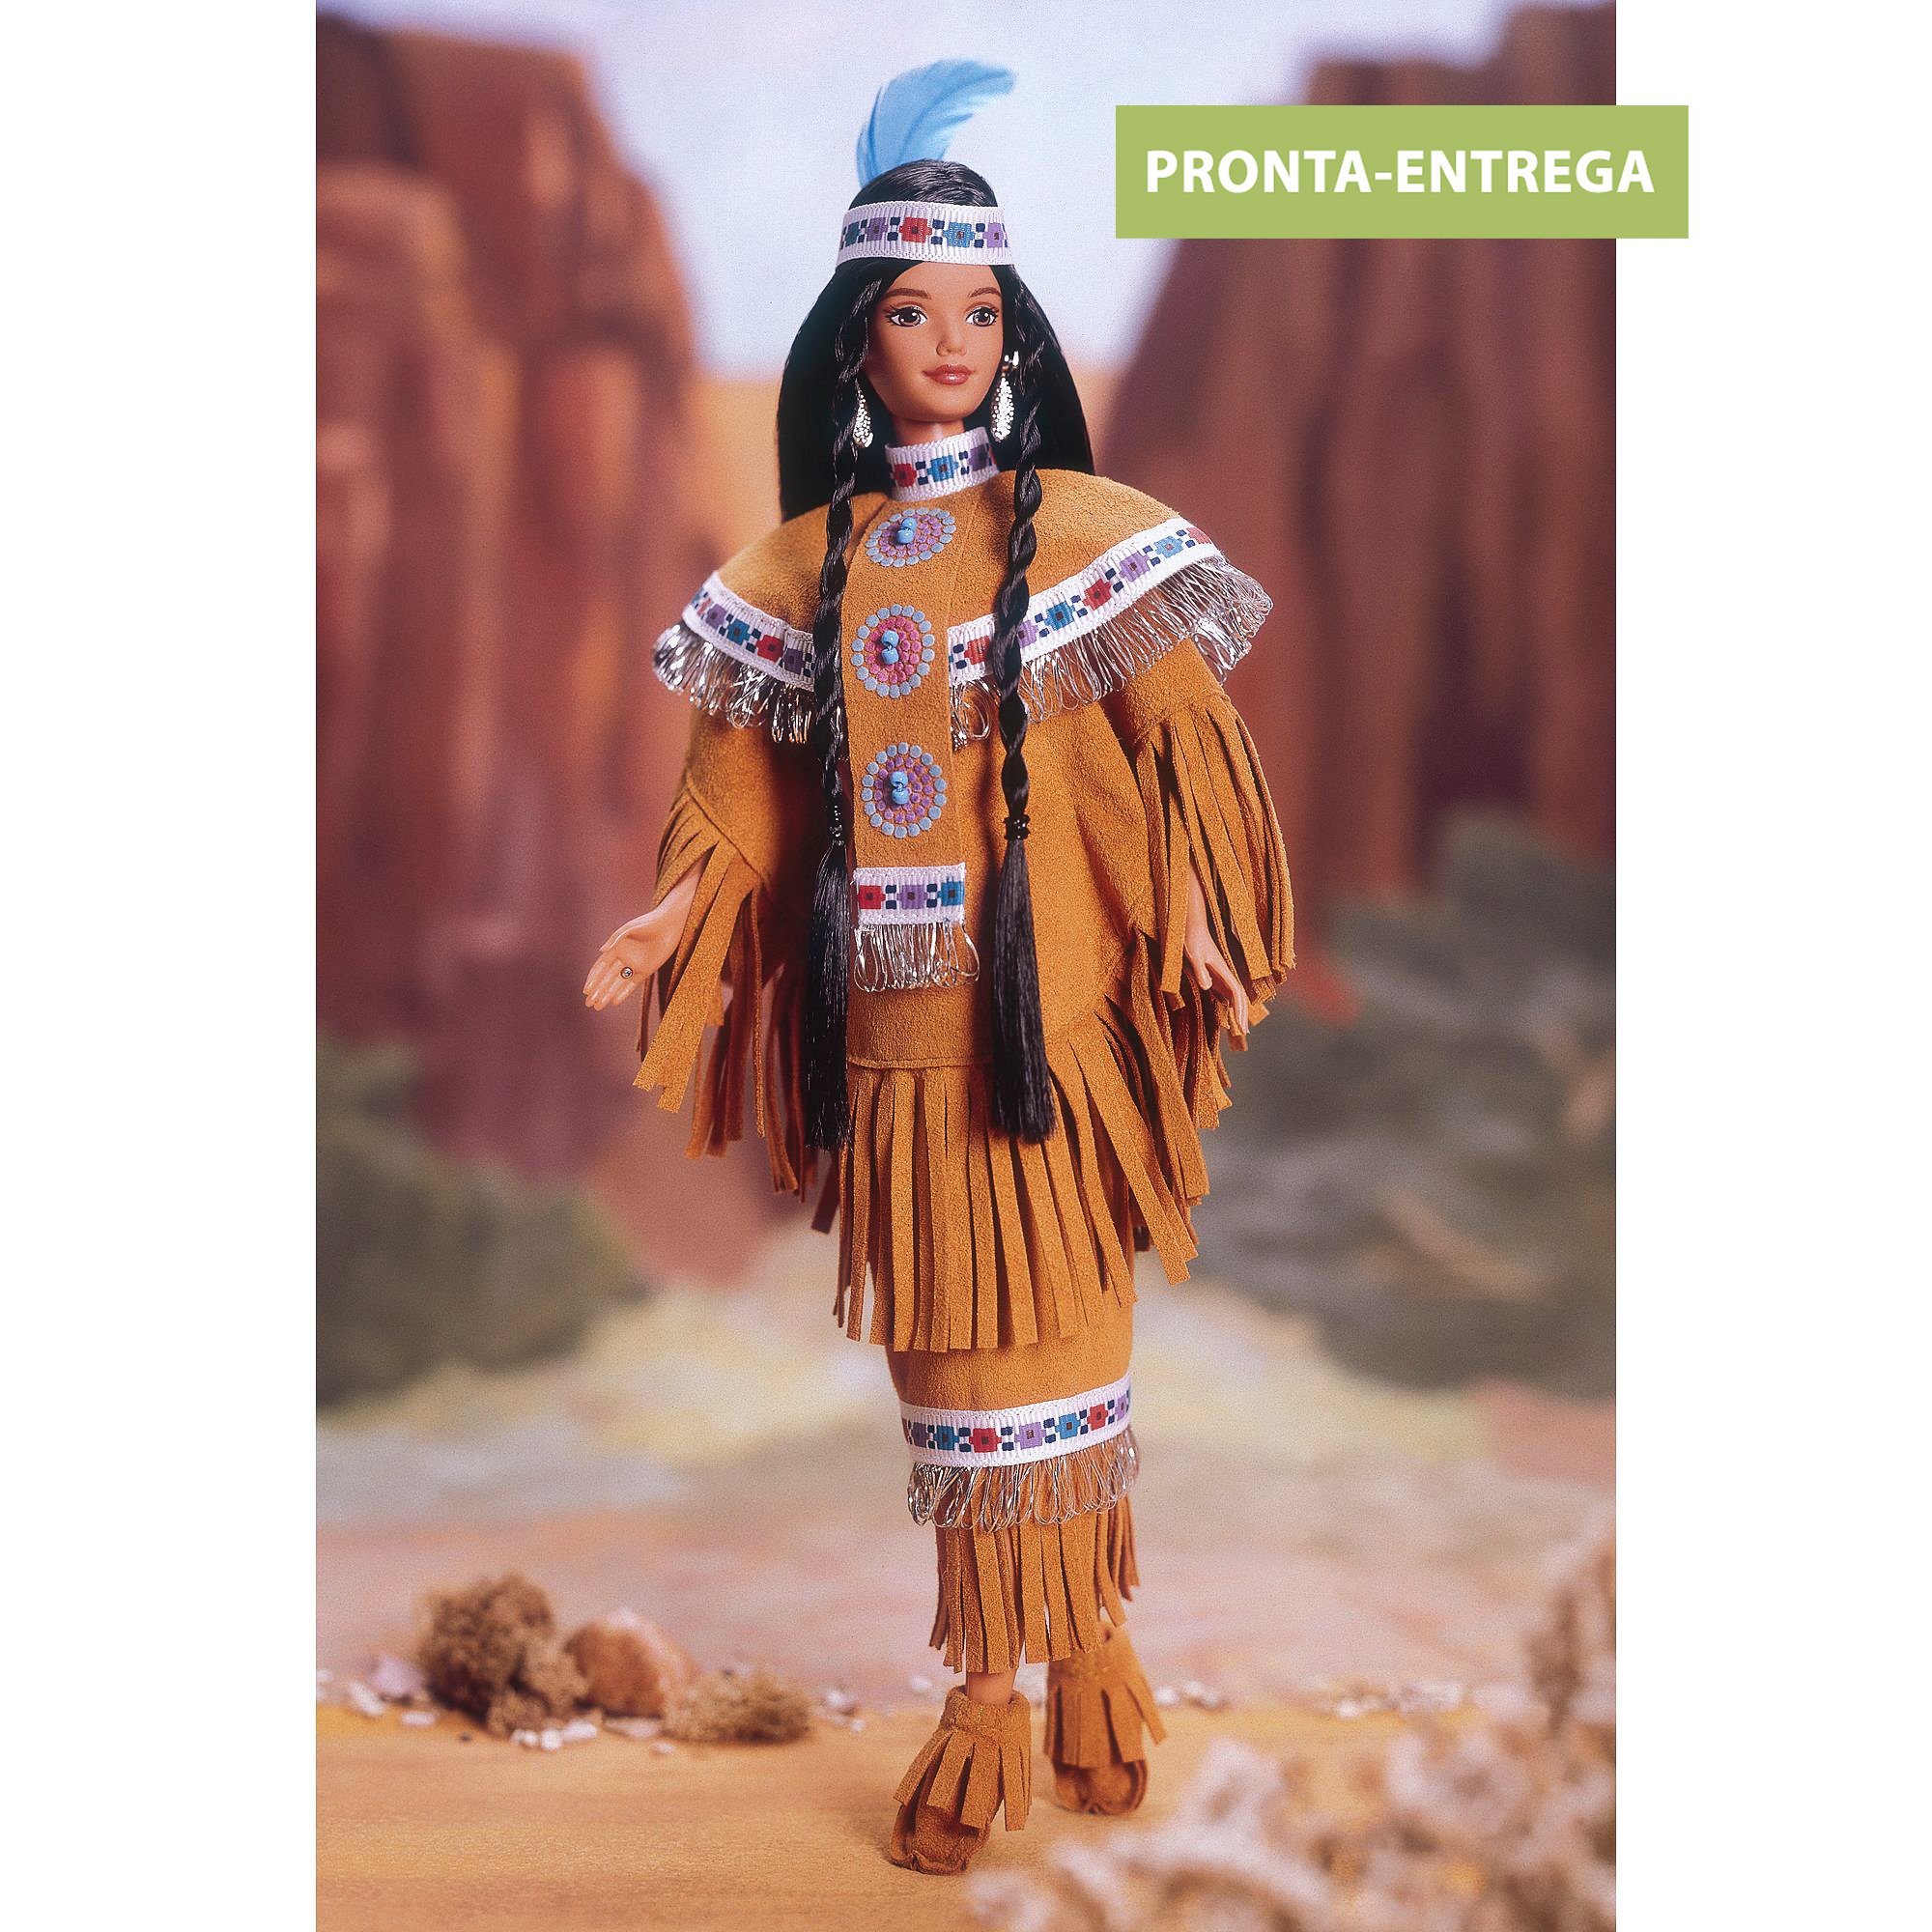 Boneca Barbie Collector DOTW Native American - Mattel